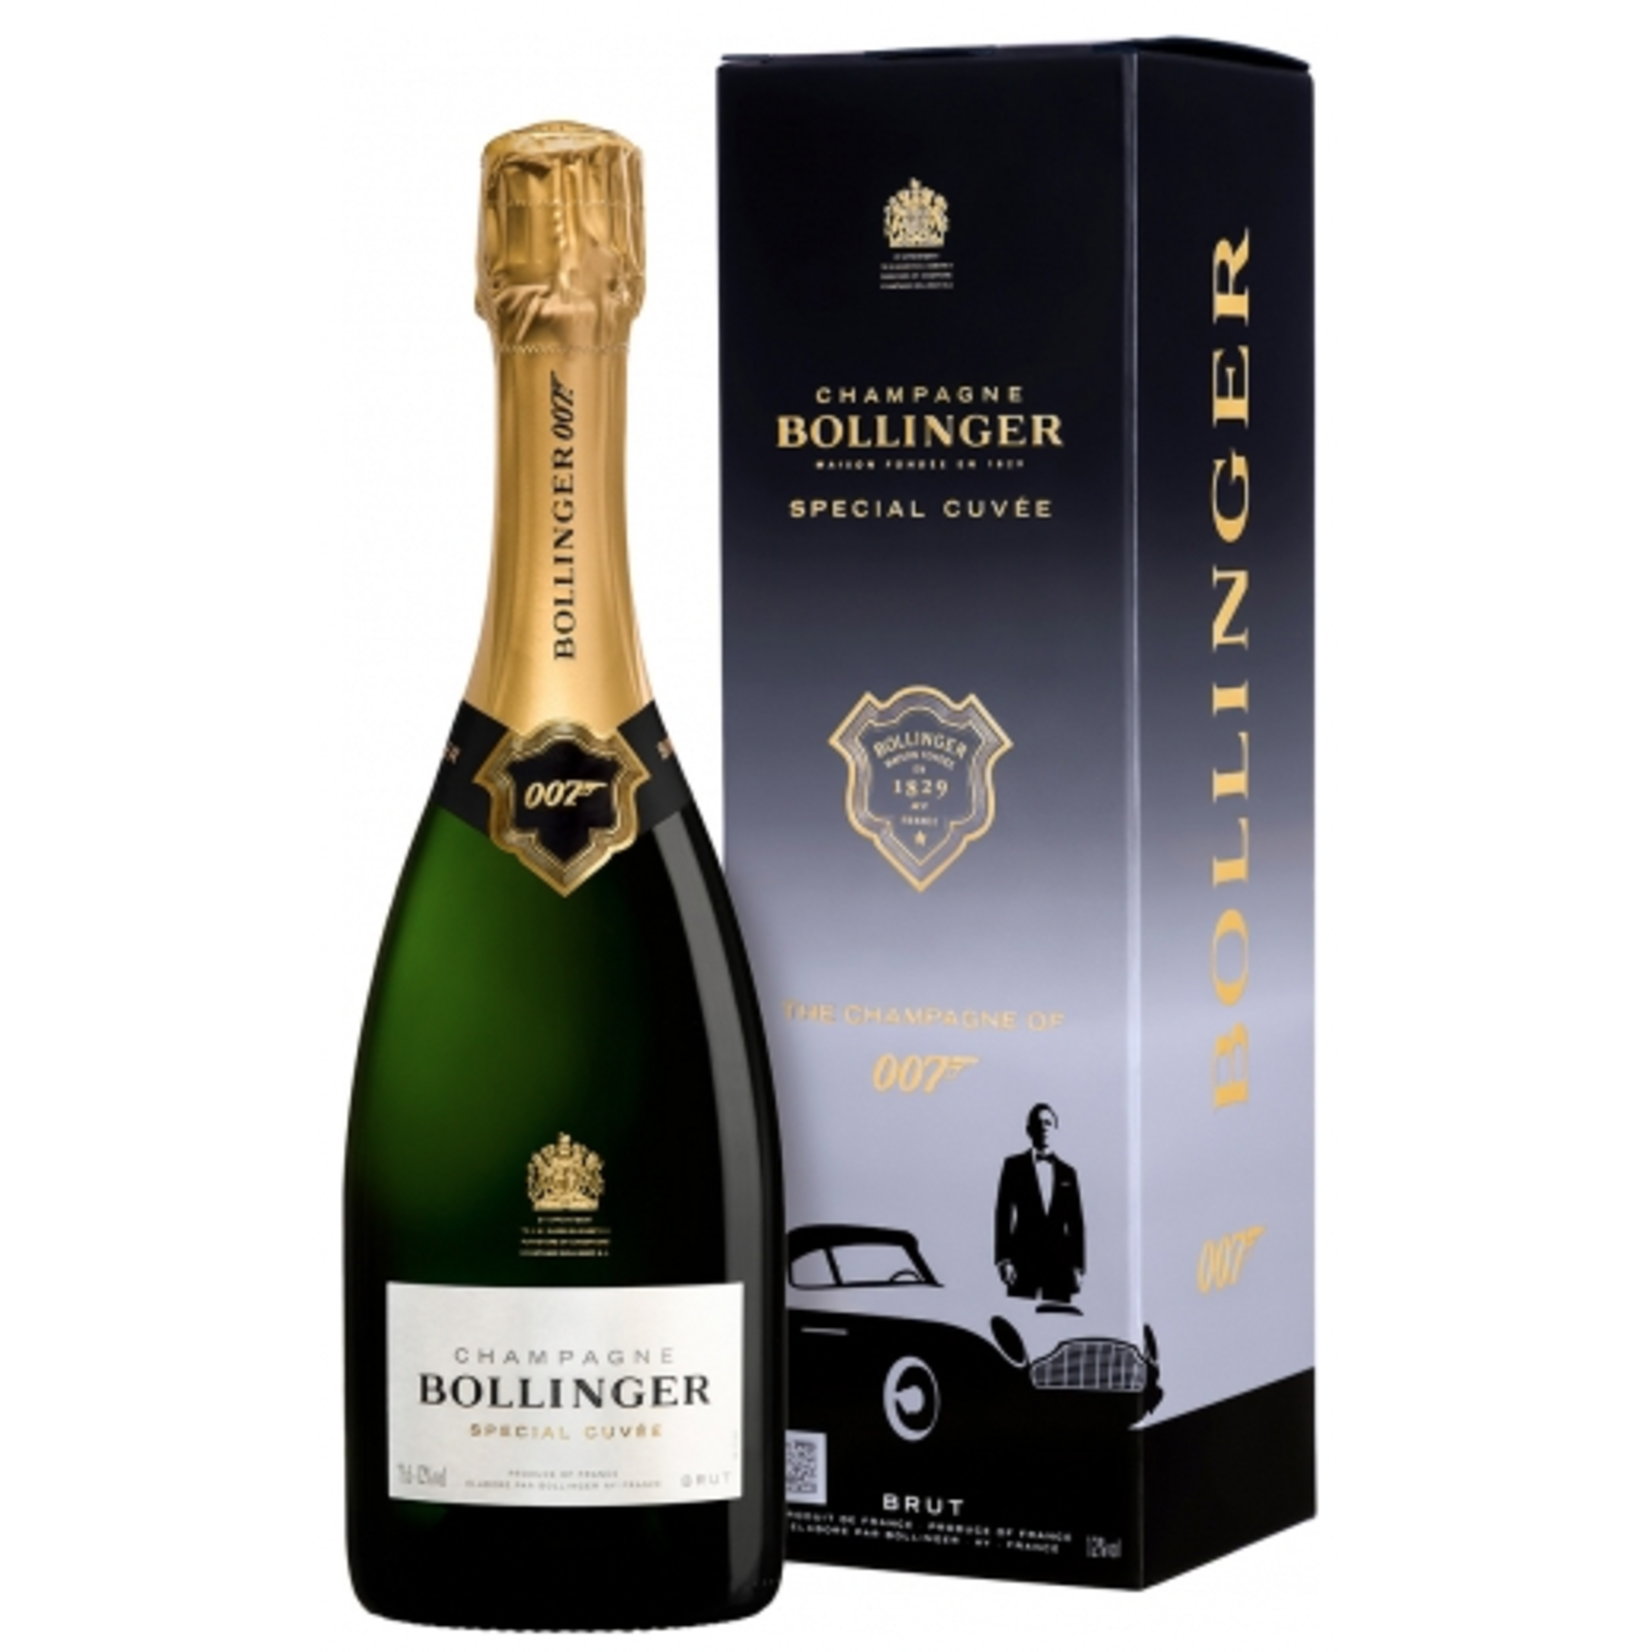 Sparkling Bollinger Champagne Special Cuvee James Bond 007 Gift Box